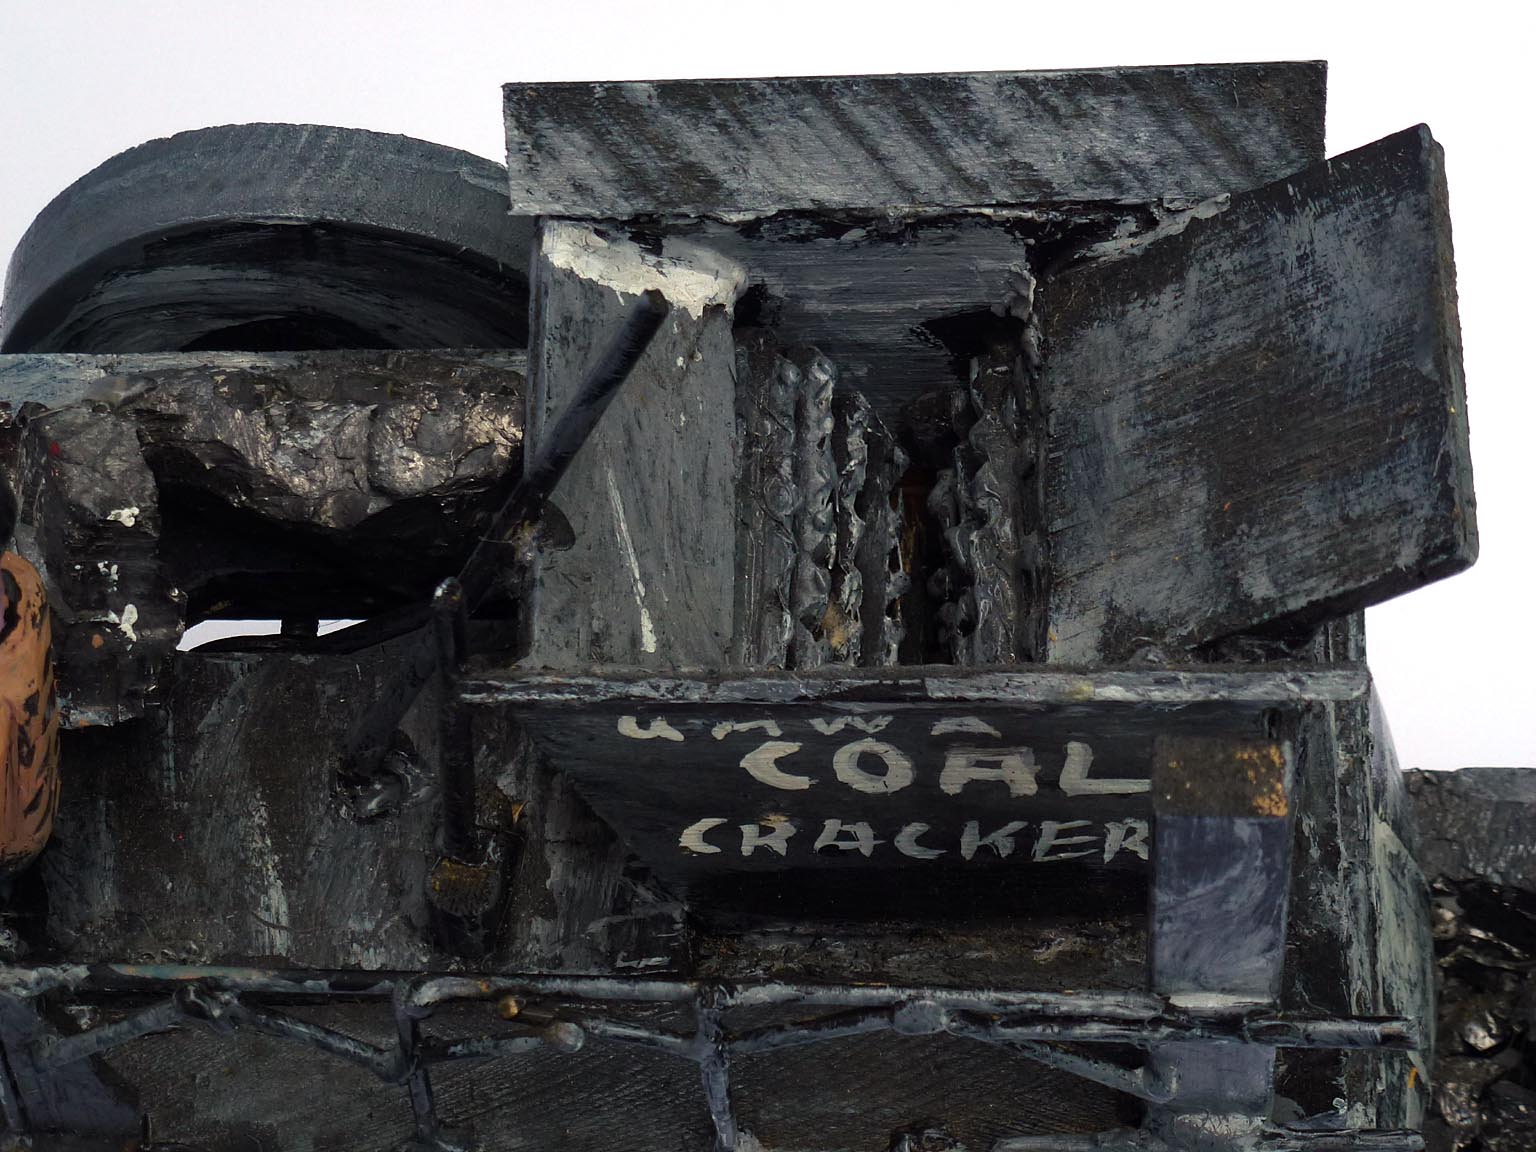 Coal cracker model by Jim Popso